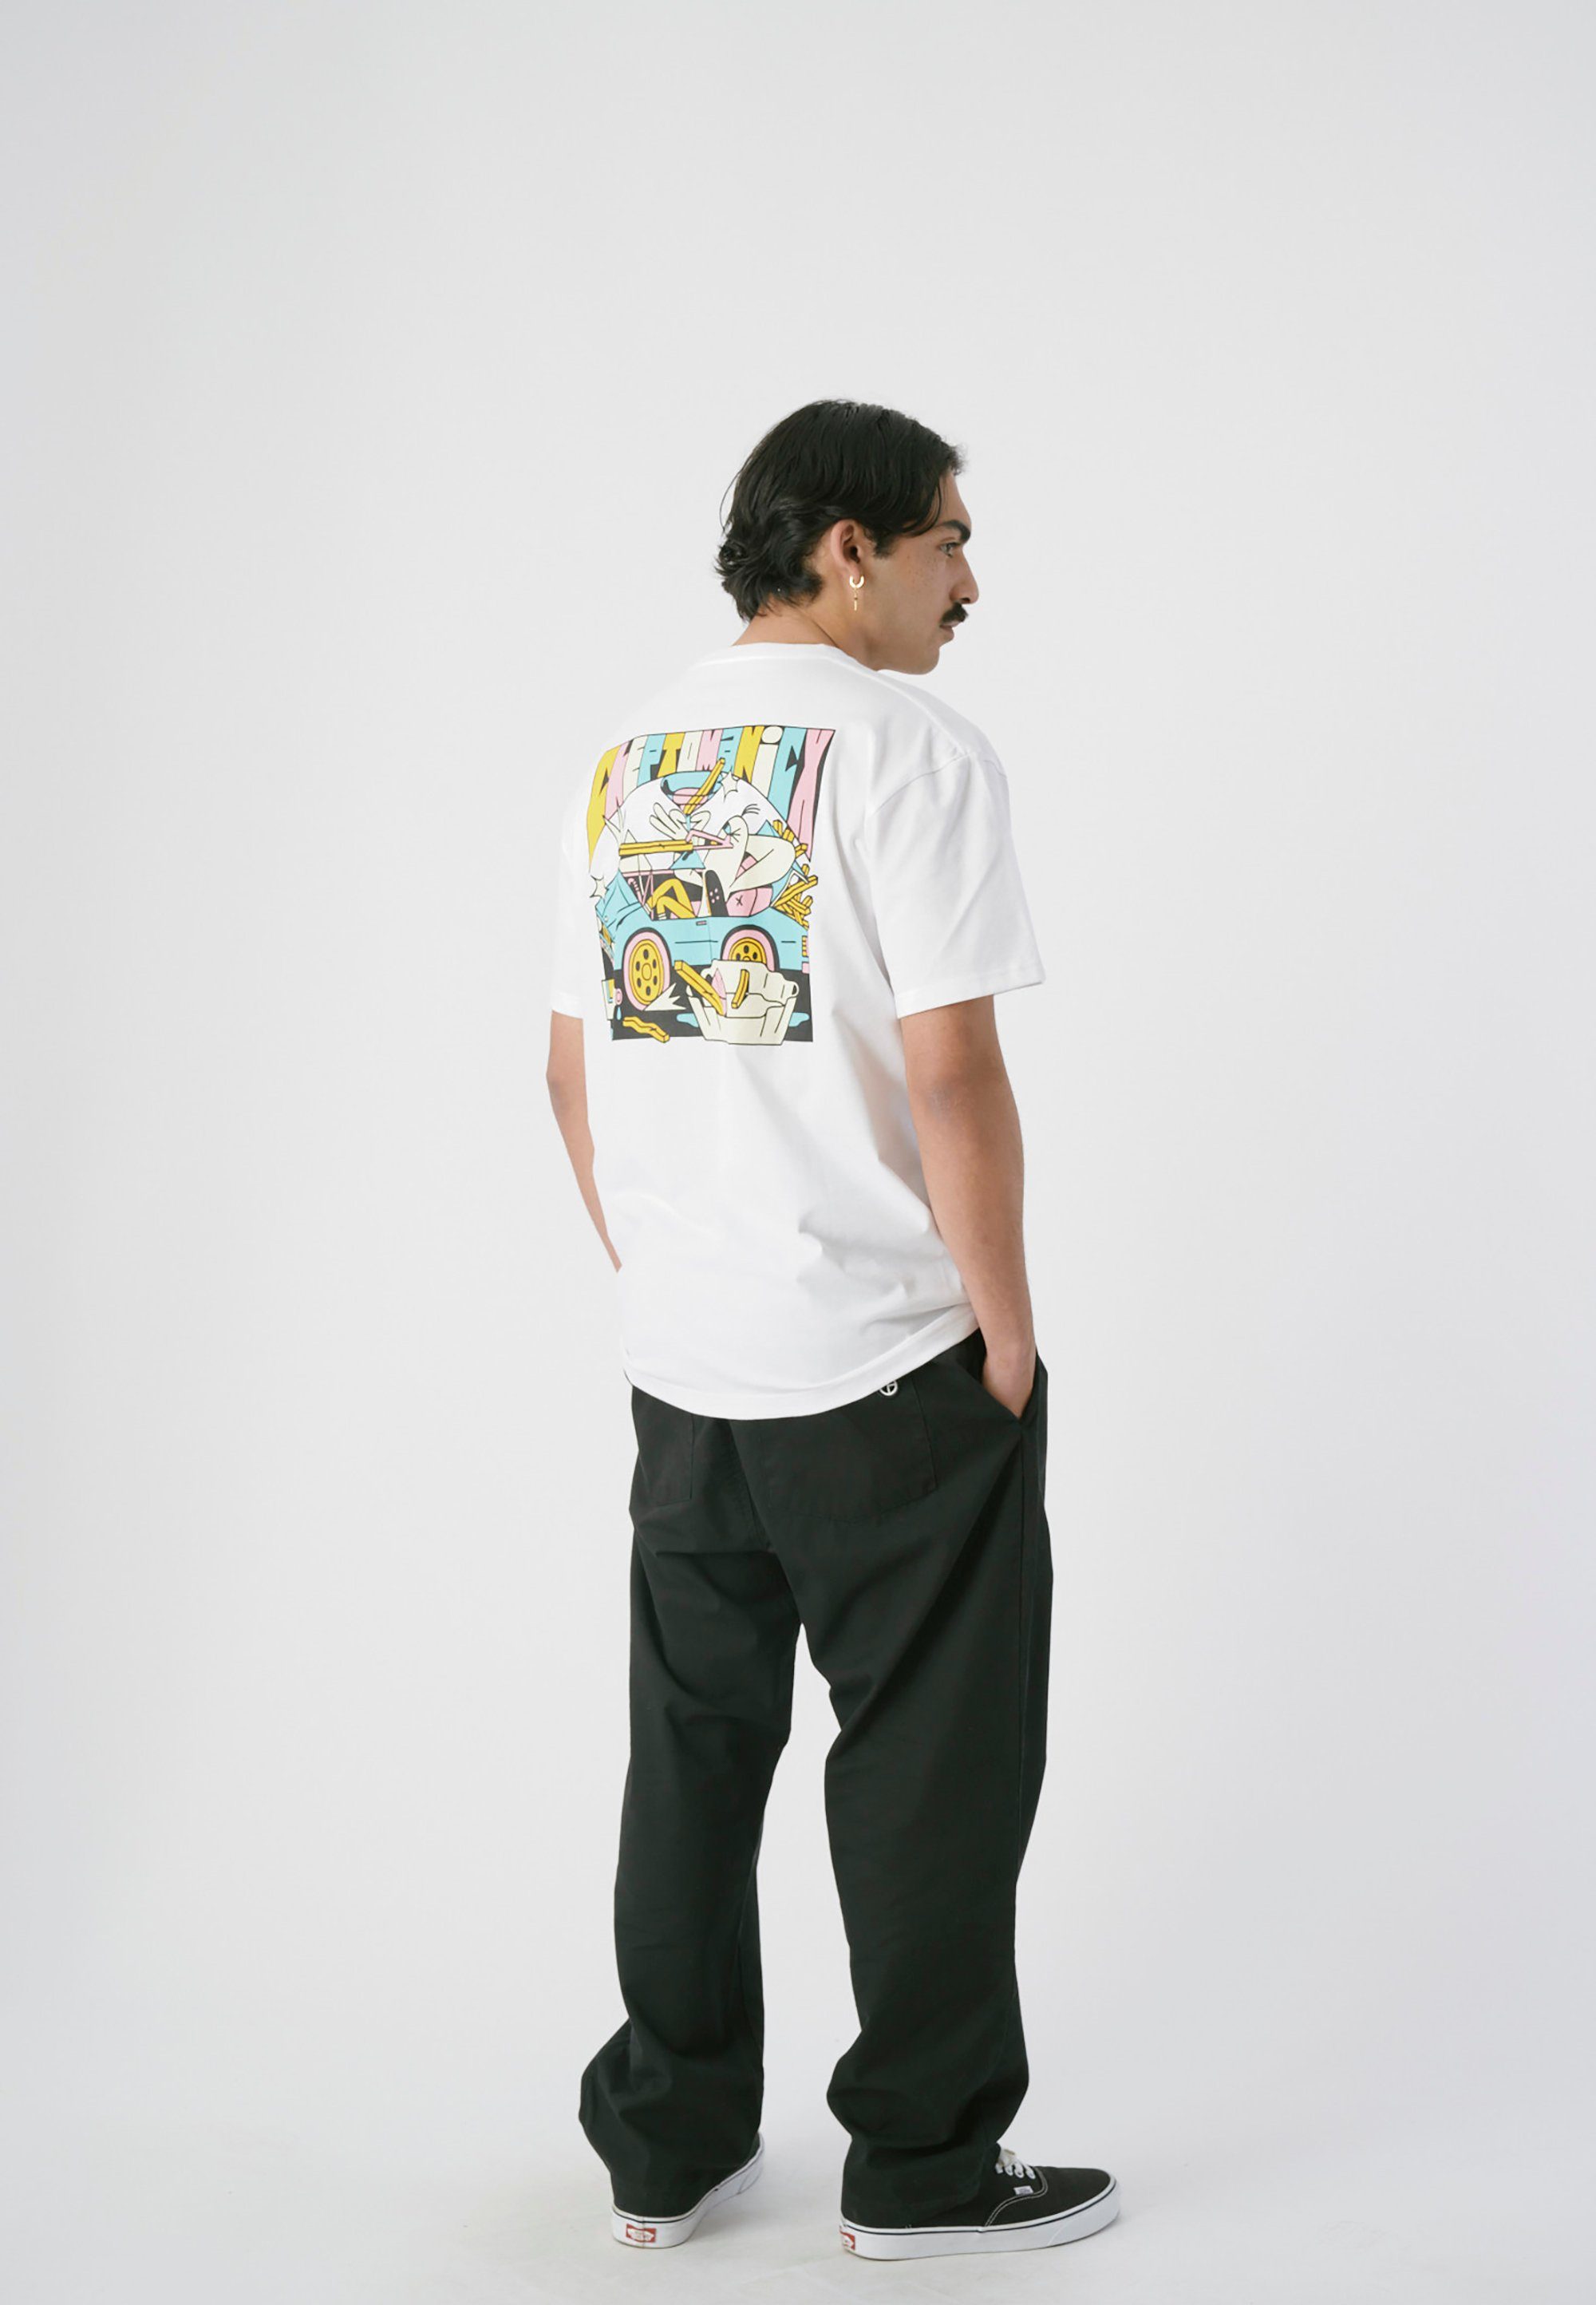 Cleptomanicx weiß mit T-Shirt Boss Backprint stylischem Gull